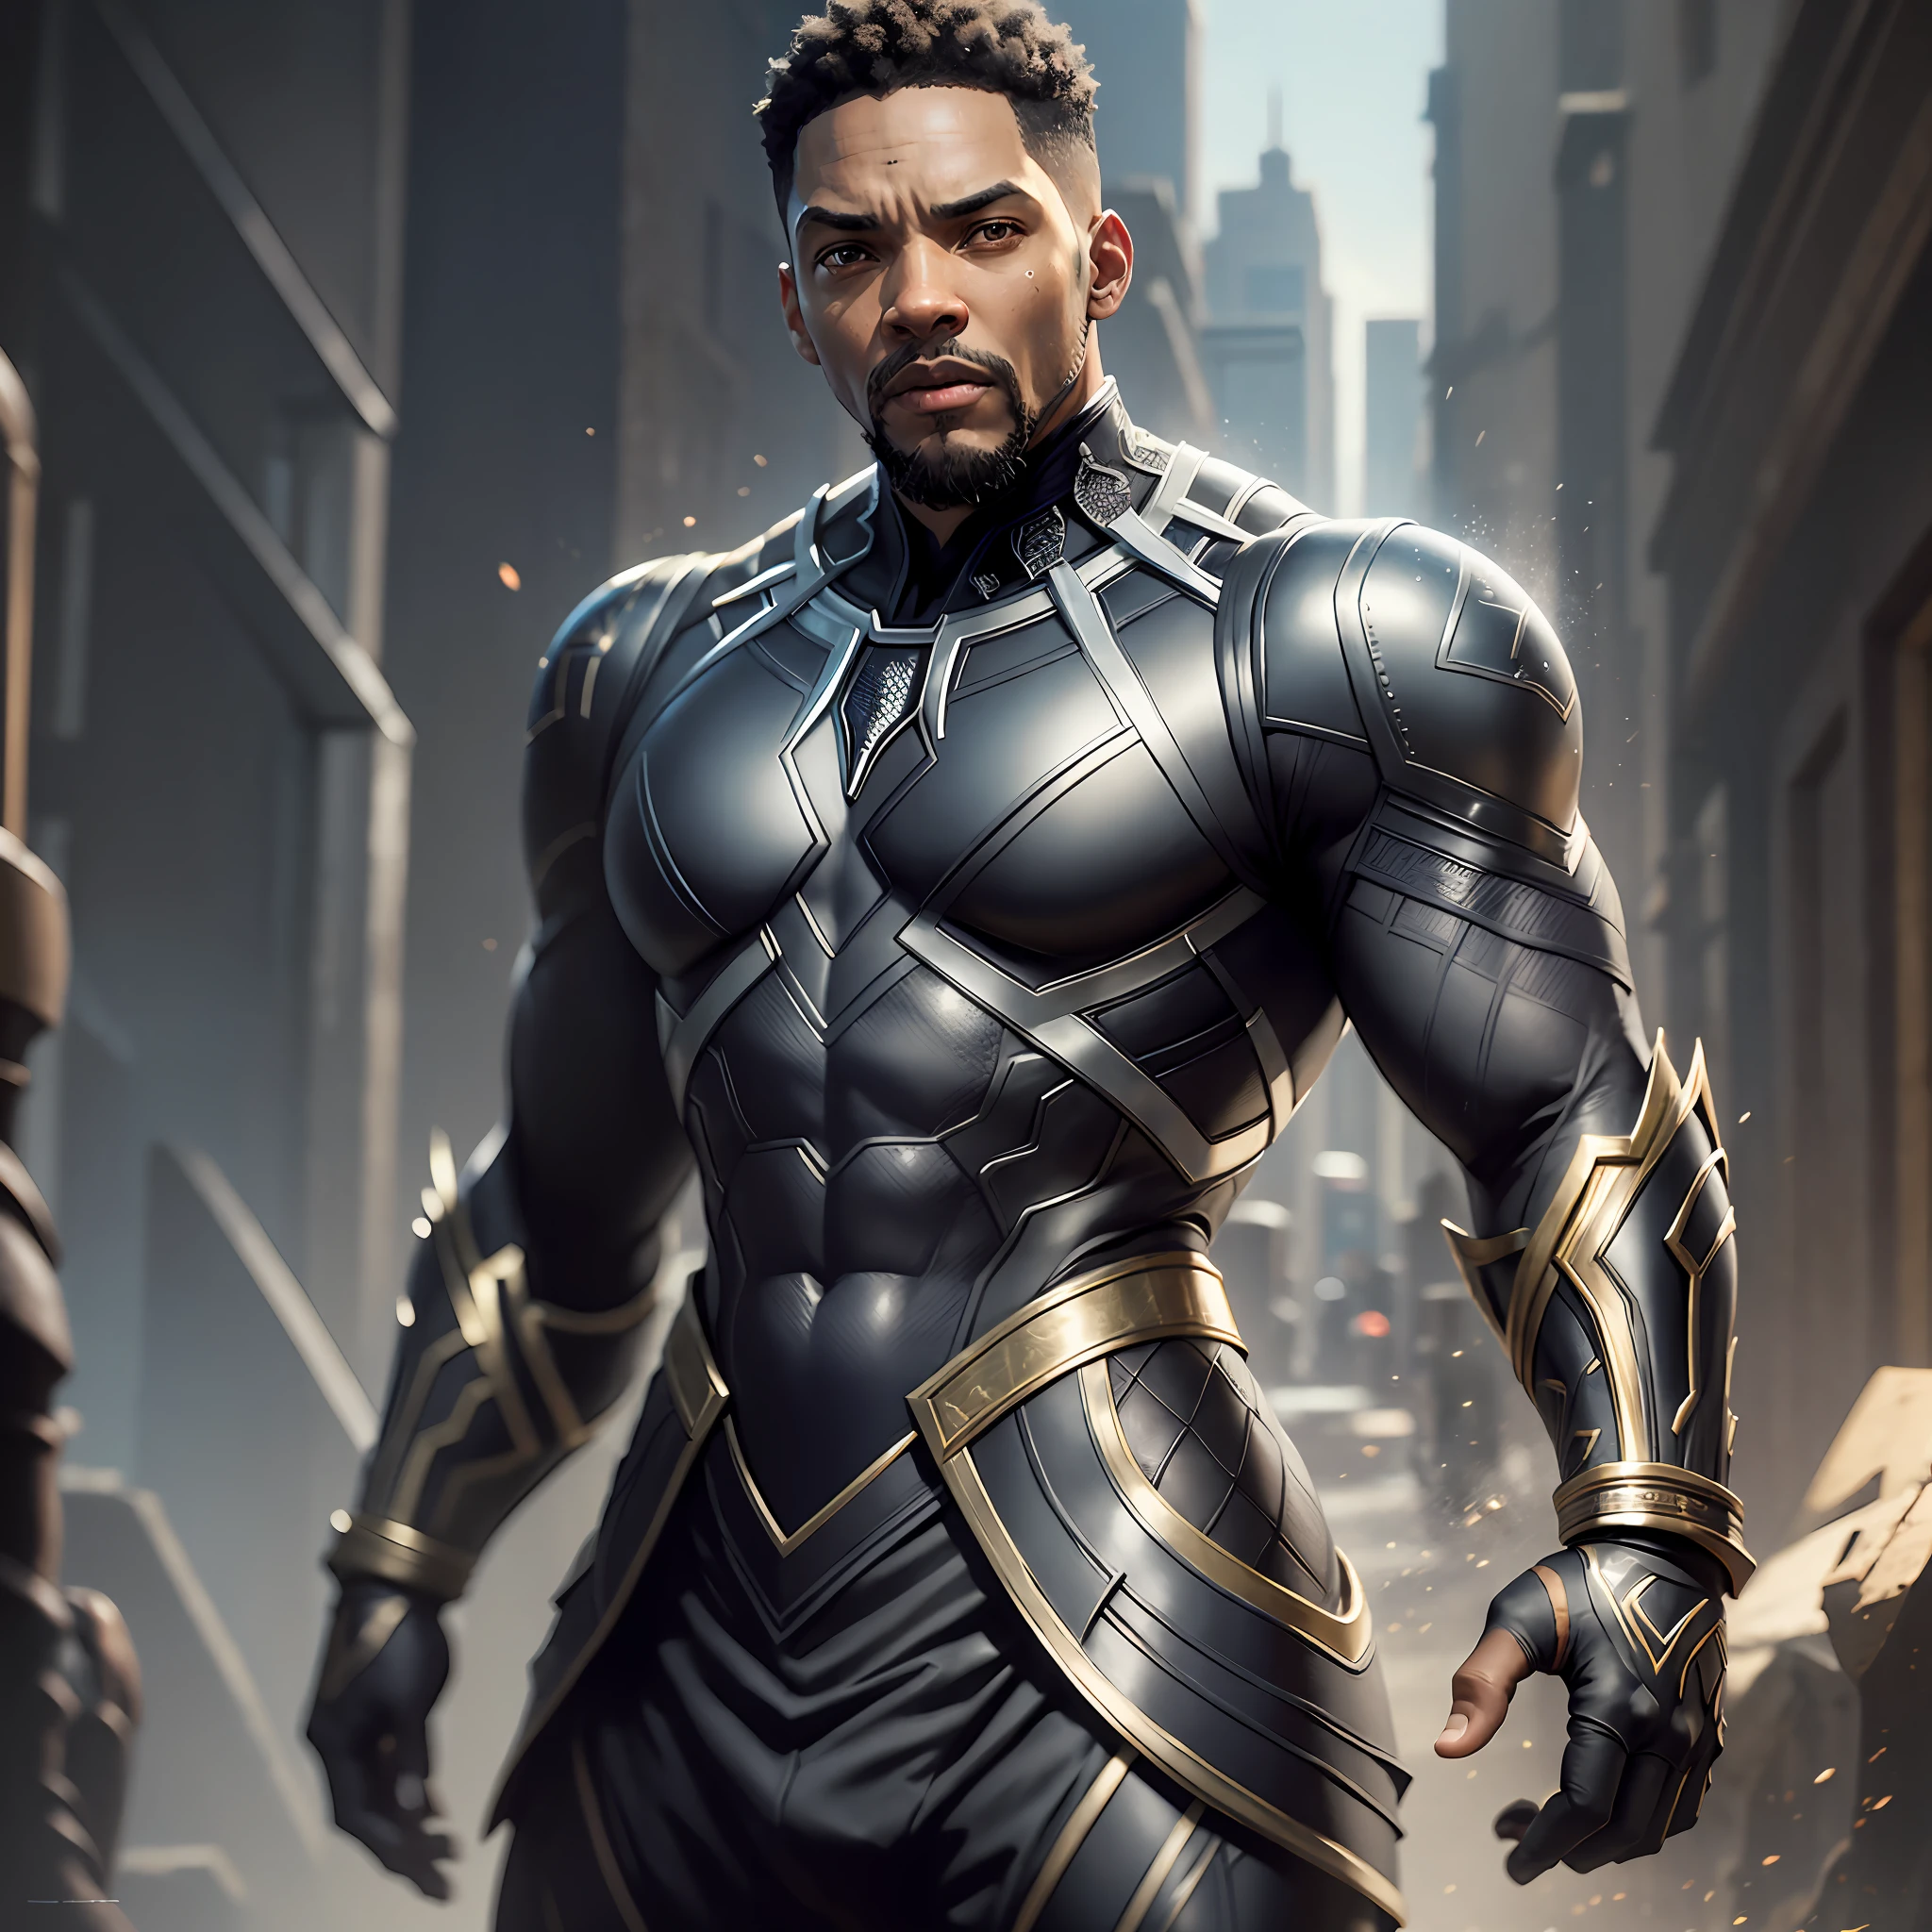 Black Panther - 黑色的 man, 美术, PS5 電影截圖, 與威爾史密斯的臉, 做萬卡達 - 男人, 黑色的, 詳細的電影渲染, 超真實感光線追踪, 附電影燈光 --auto --s2